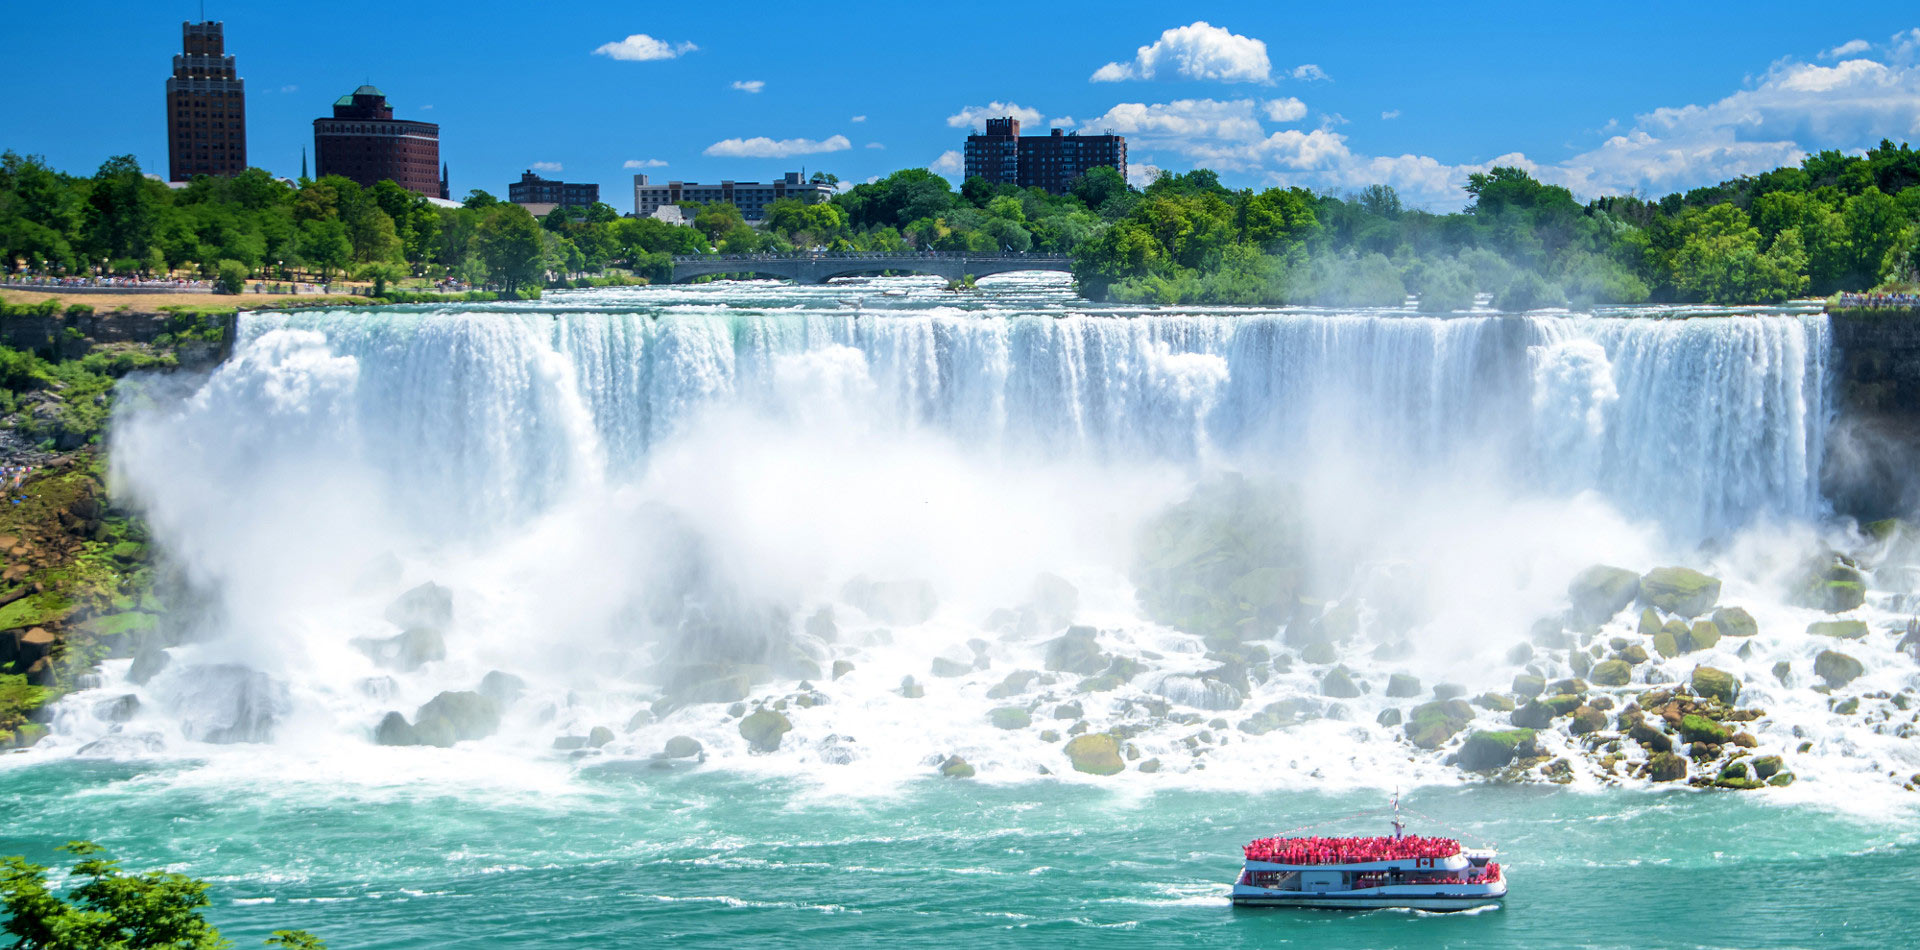 The Niagara falls - a week in Canada Itinerary